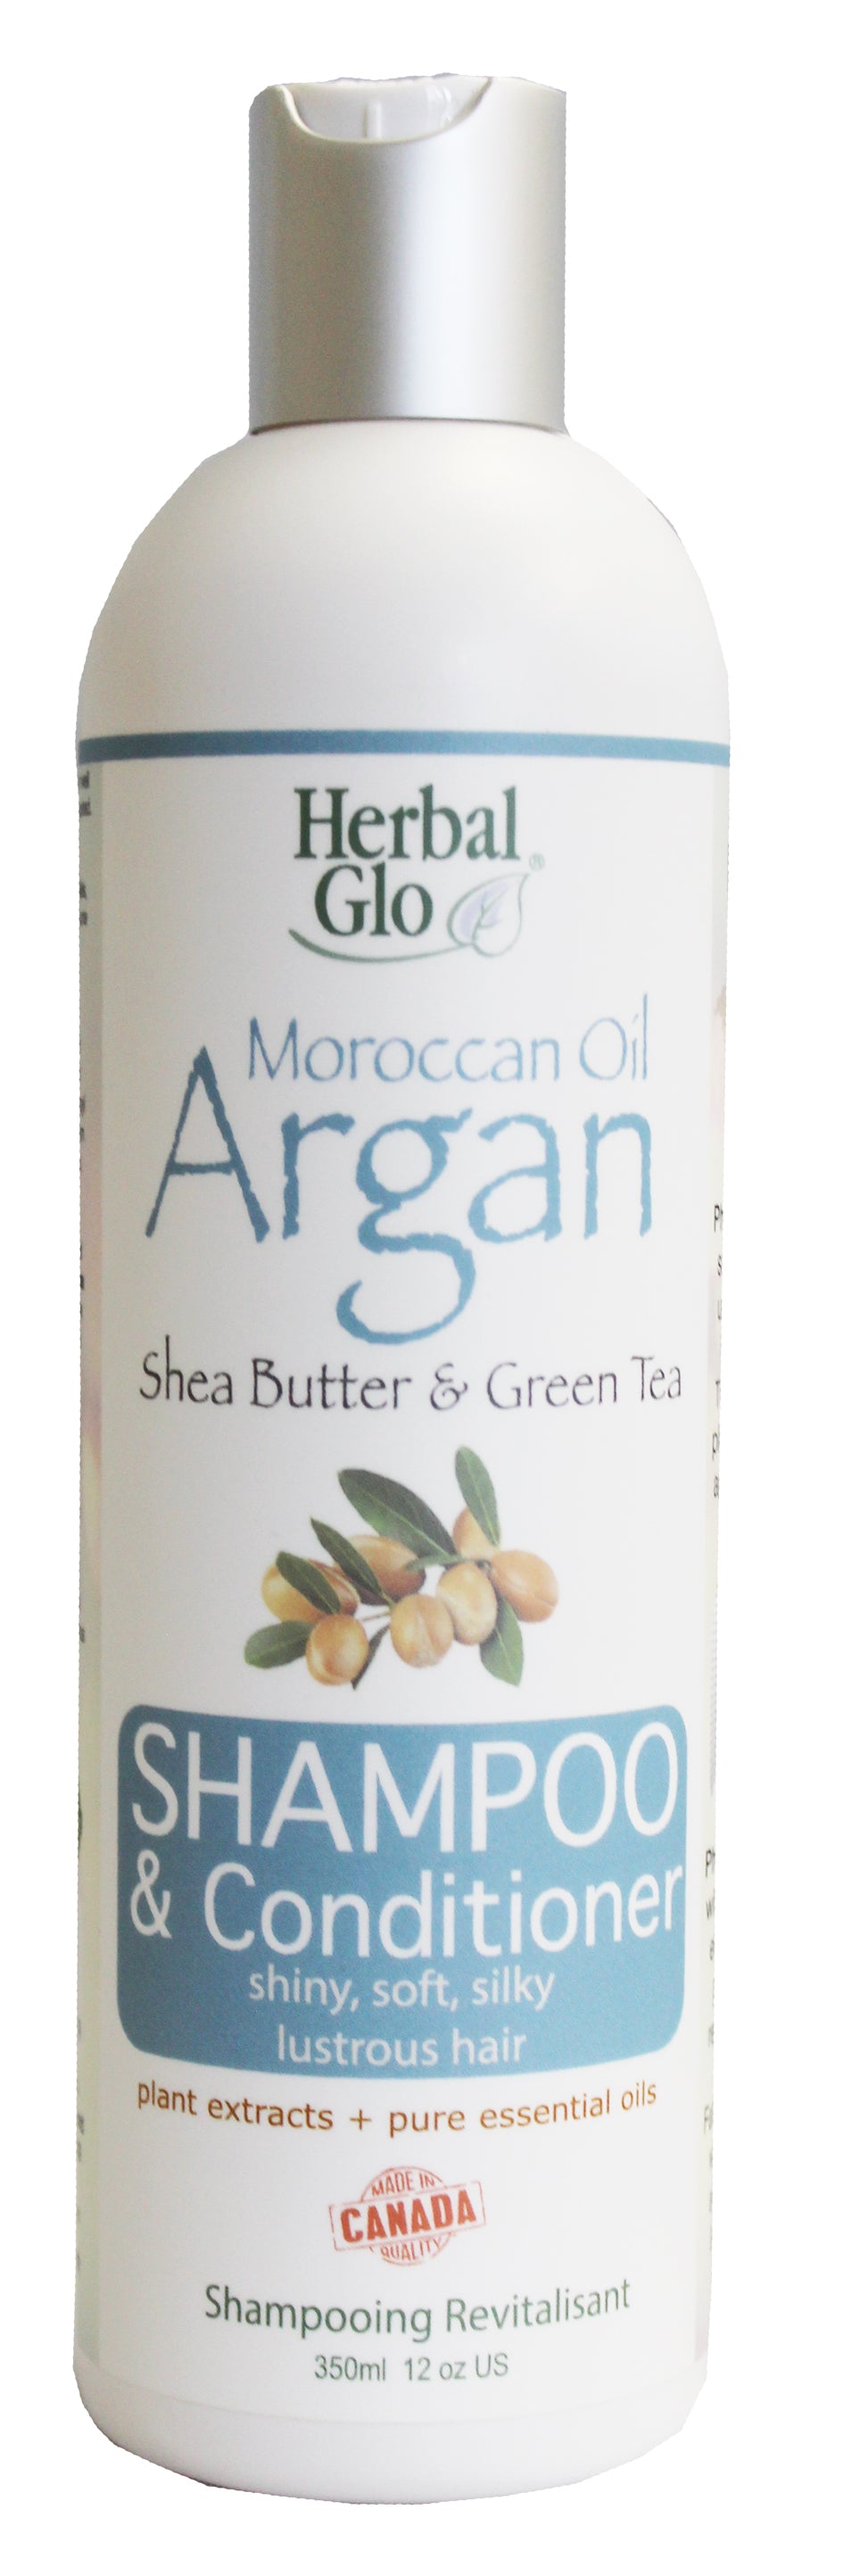 Moroccan Oil Argan Shampoo + Conditioner, 350ml